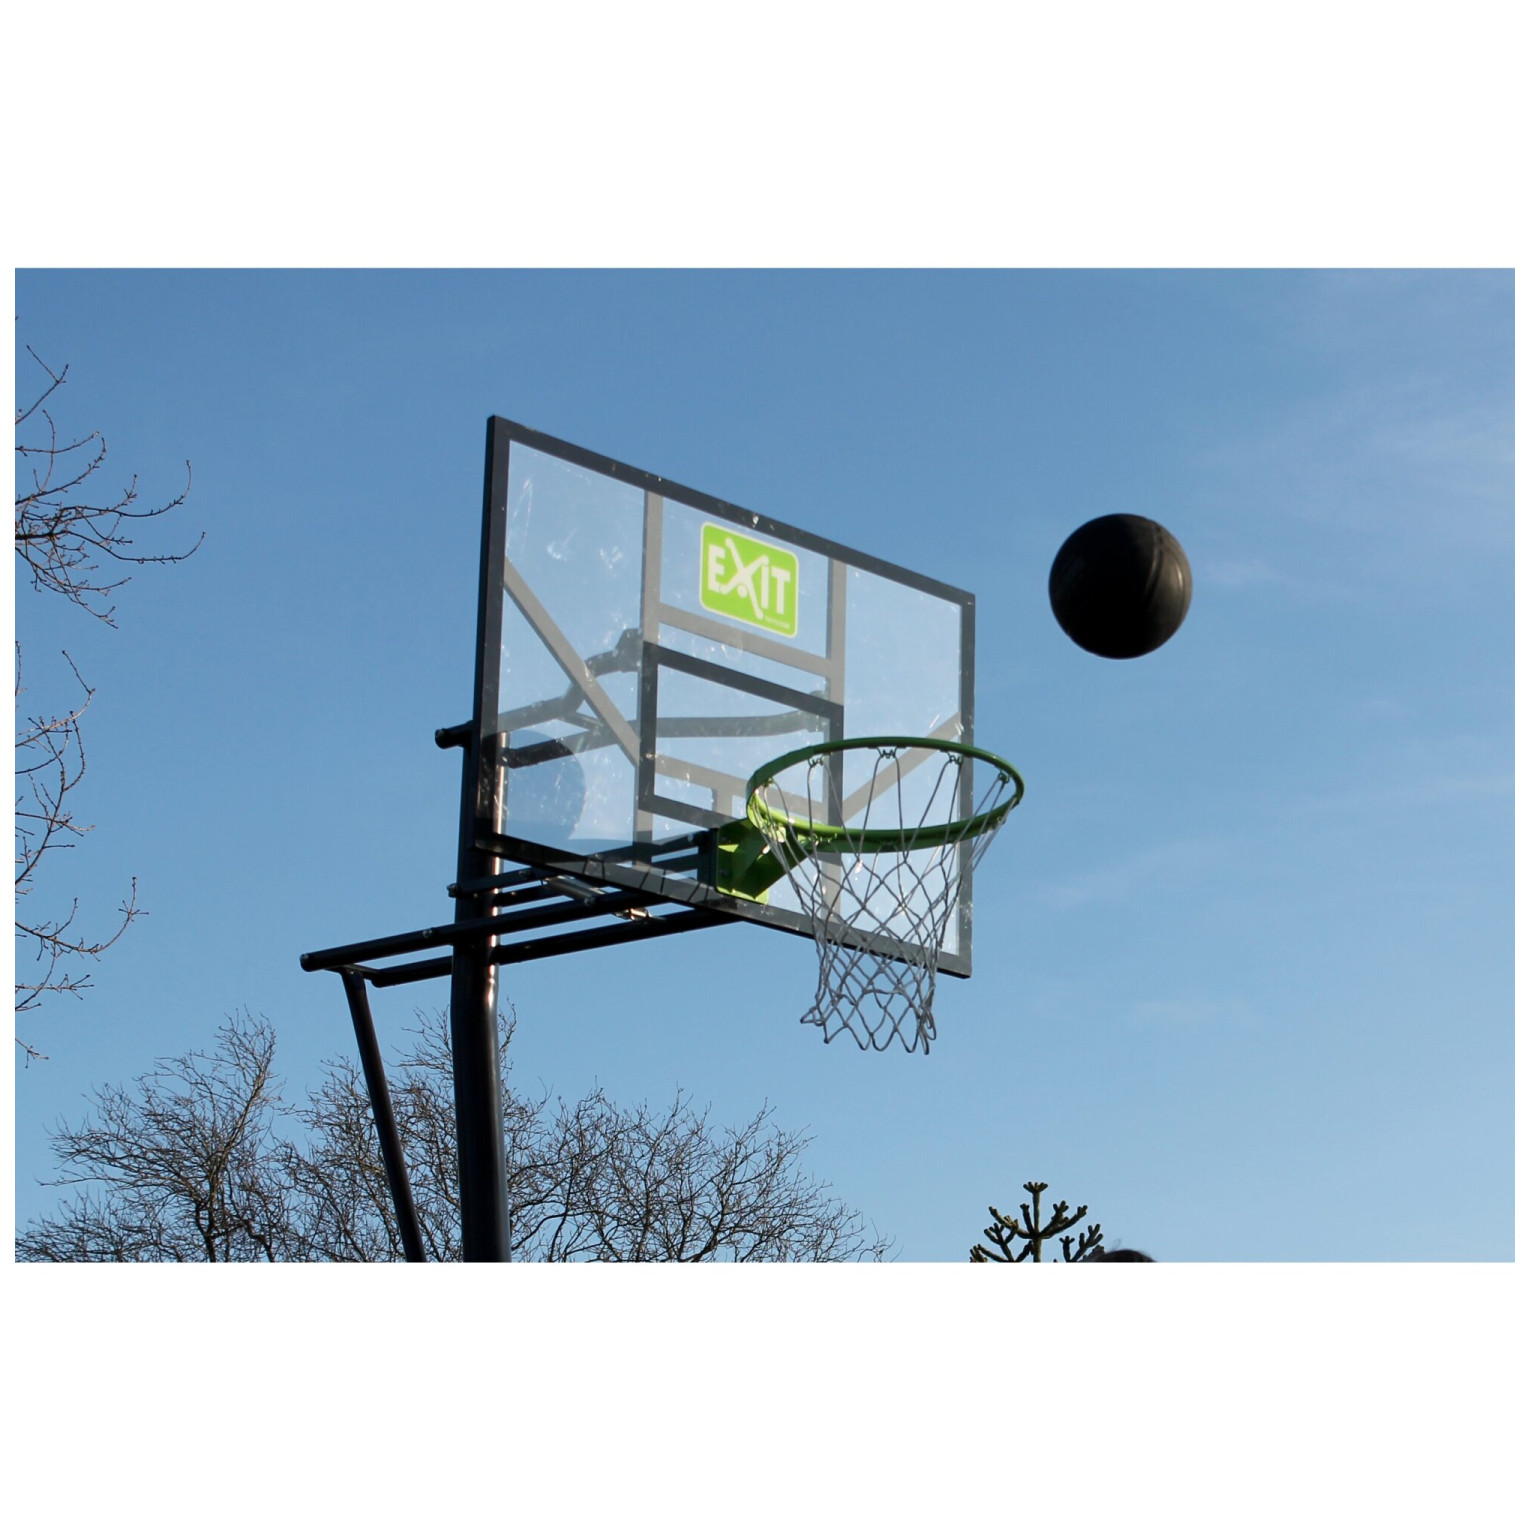 EXIT Galaxy basketbalbord voor grondmontage - groen/zwart